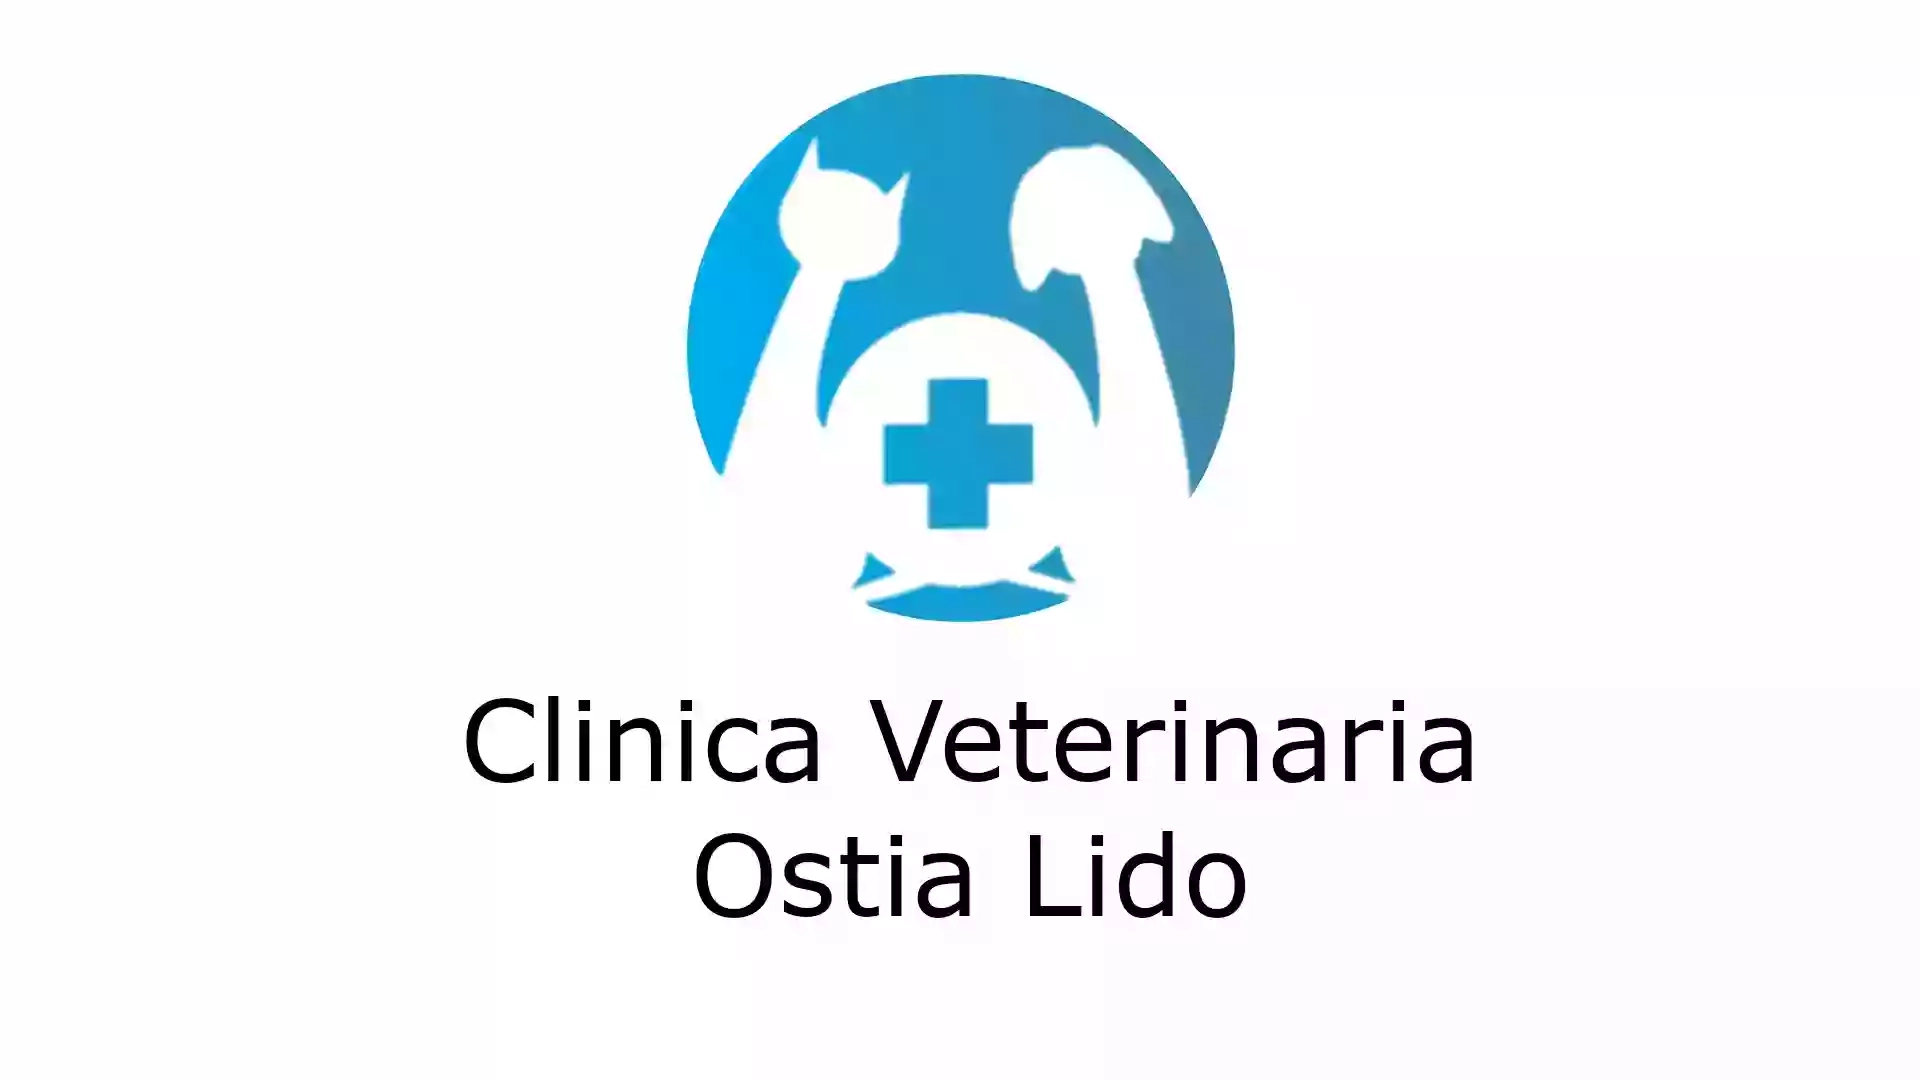 Clinica Veterinaria Ostia Lido